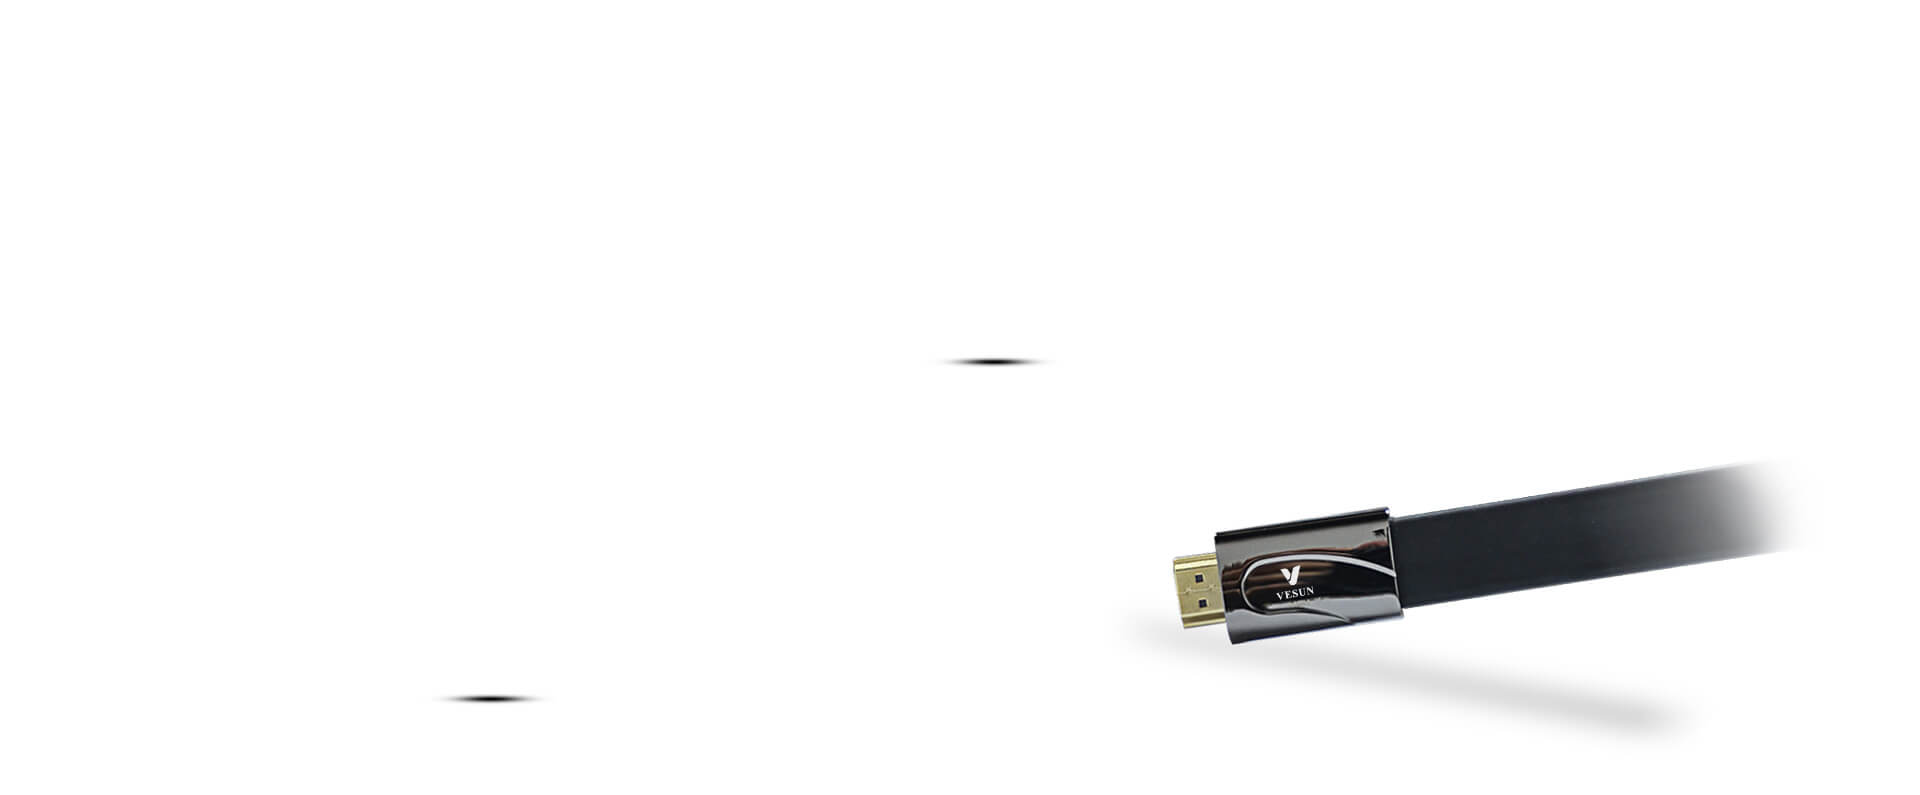 VESUN威胜视听器材-HDMI线材